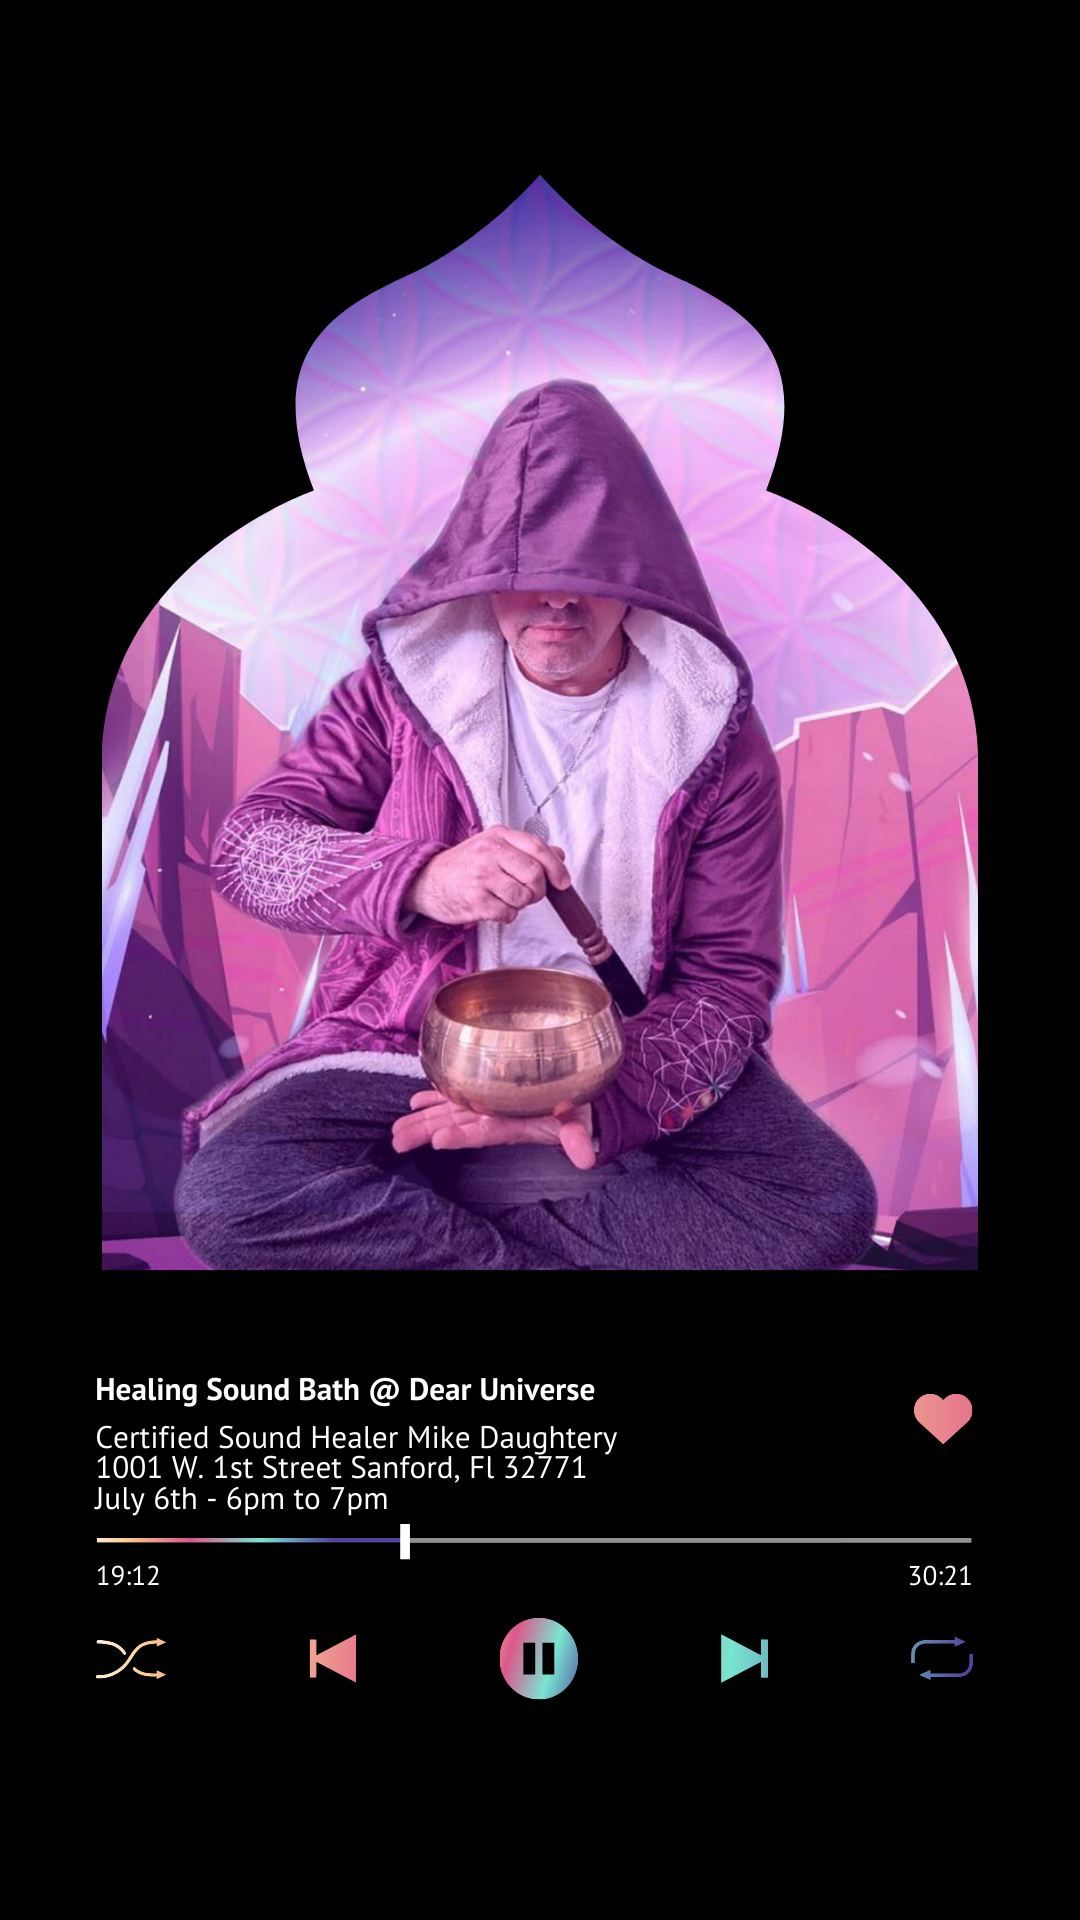 Healing Sound Bath With Certified Sound Healer Mike D @ Dear Universe